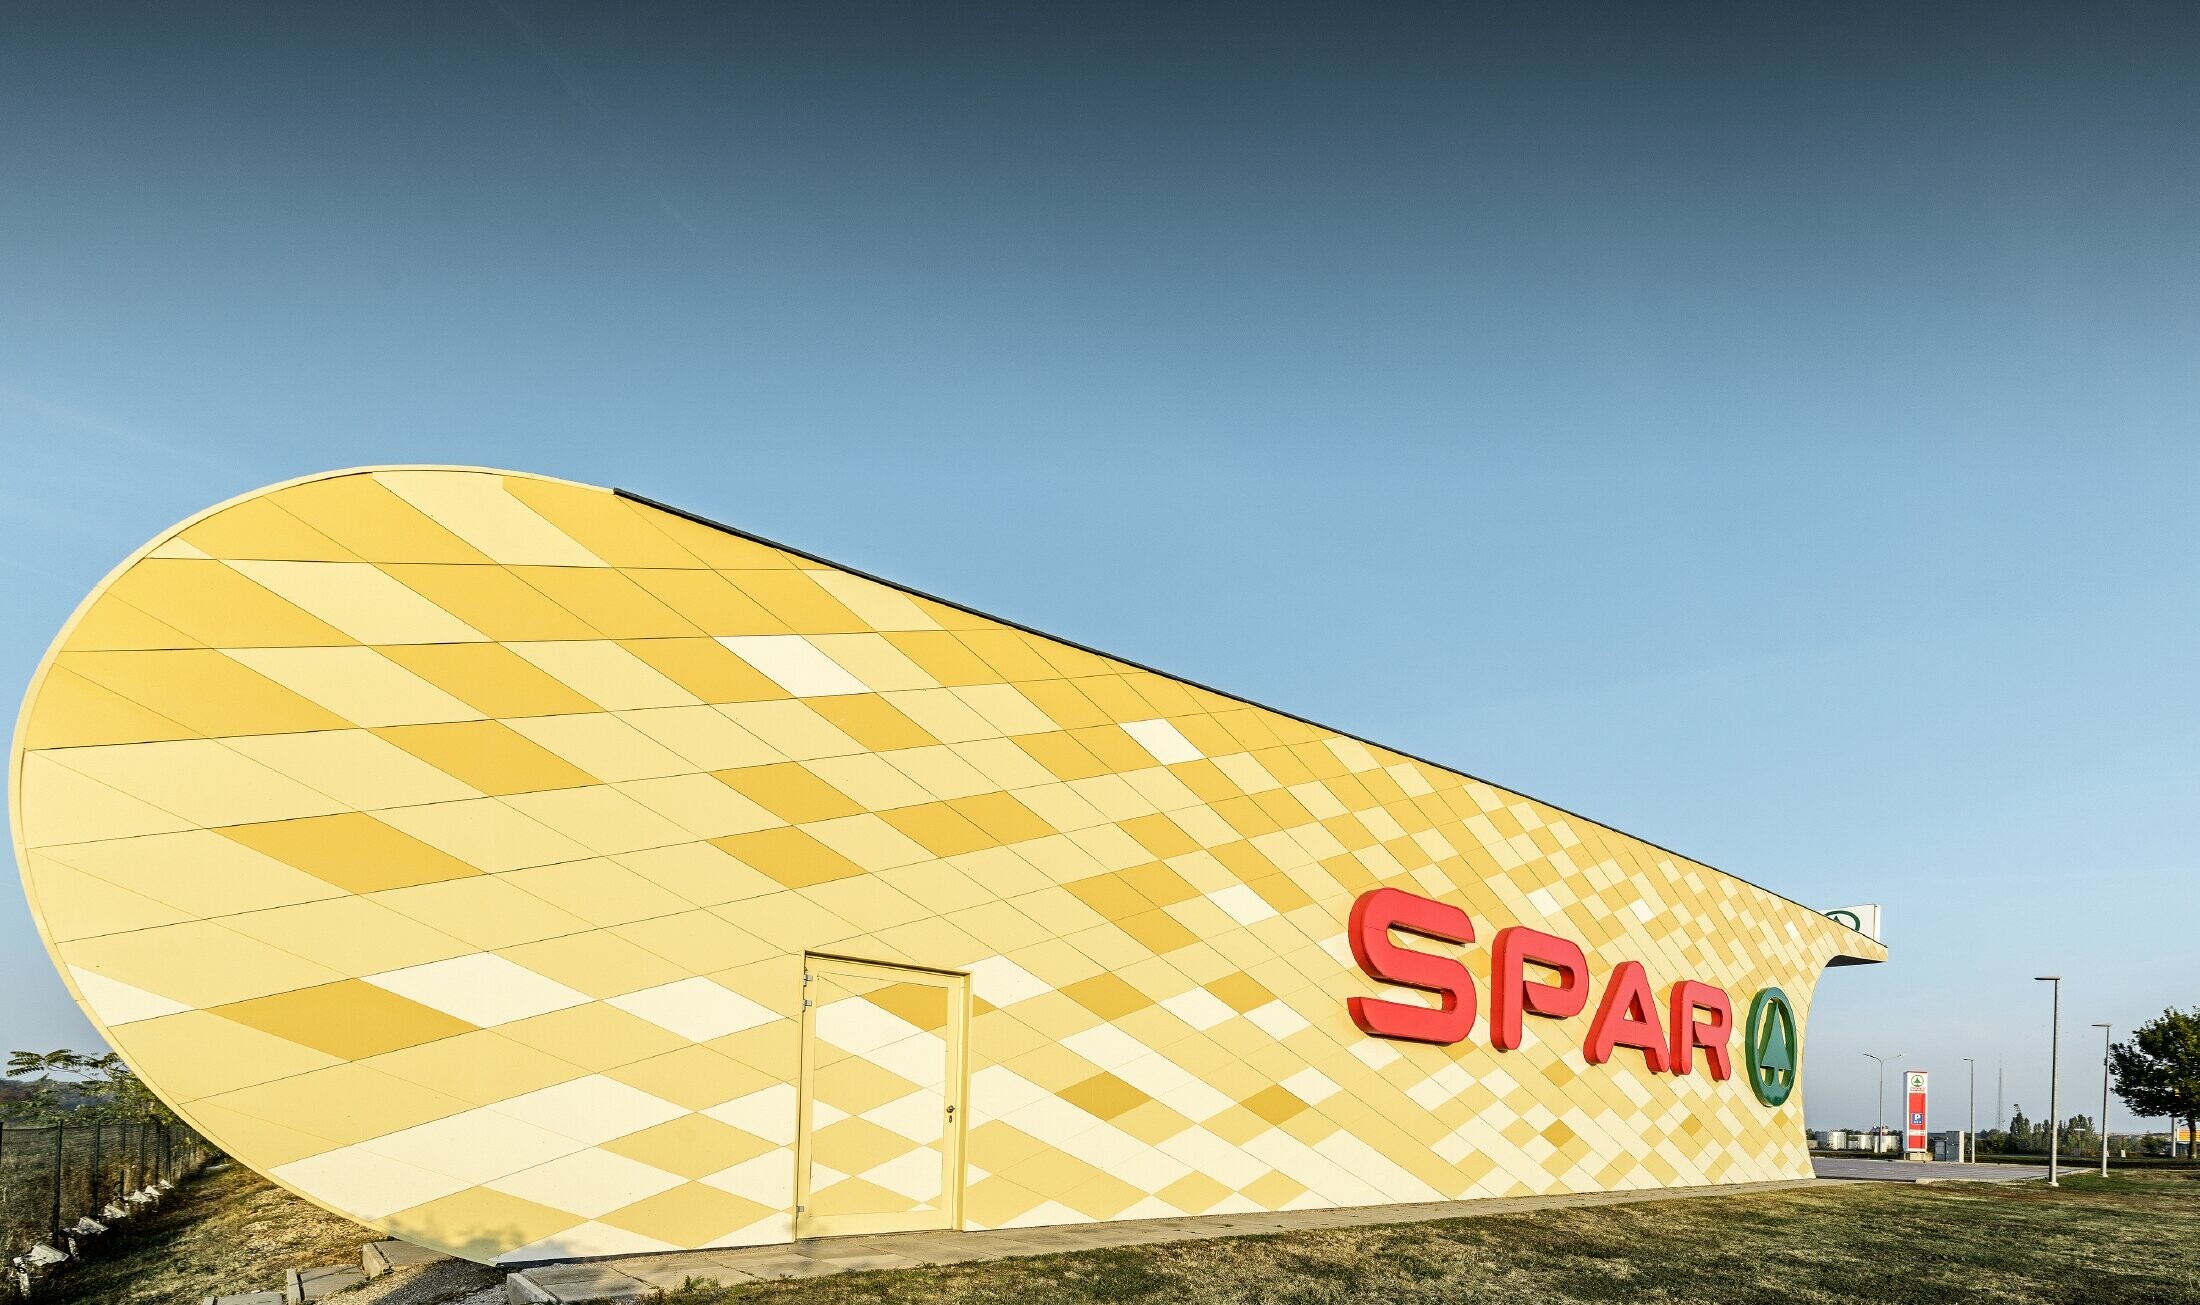 Spar branch with an aluminium façade in yellow and orange checks and the Spar logo